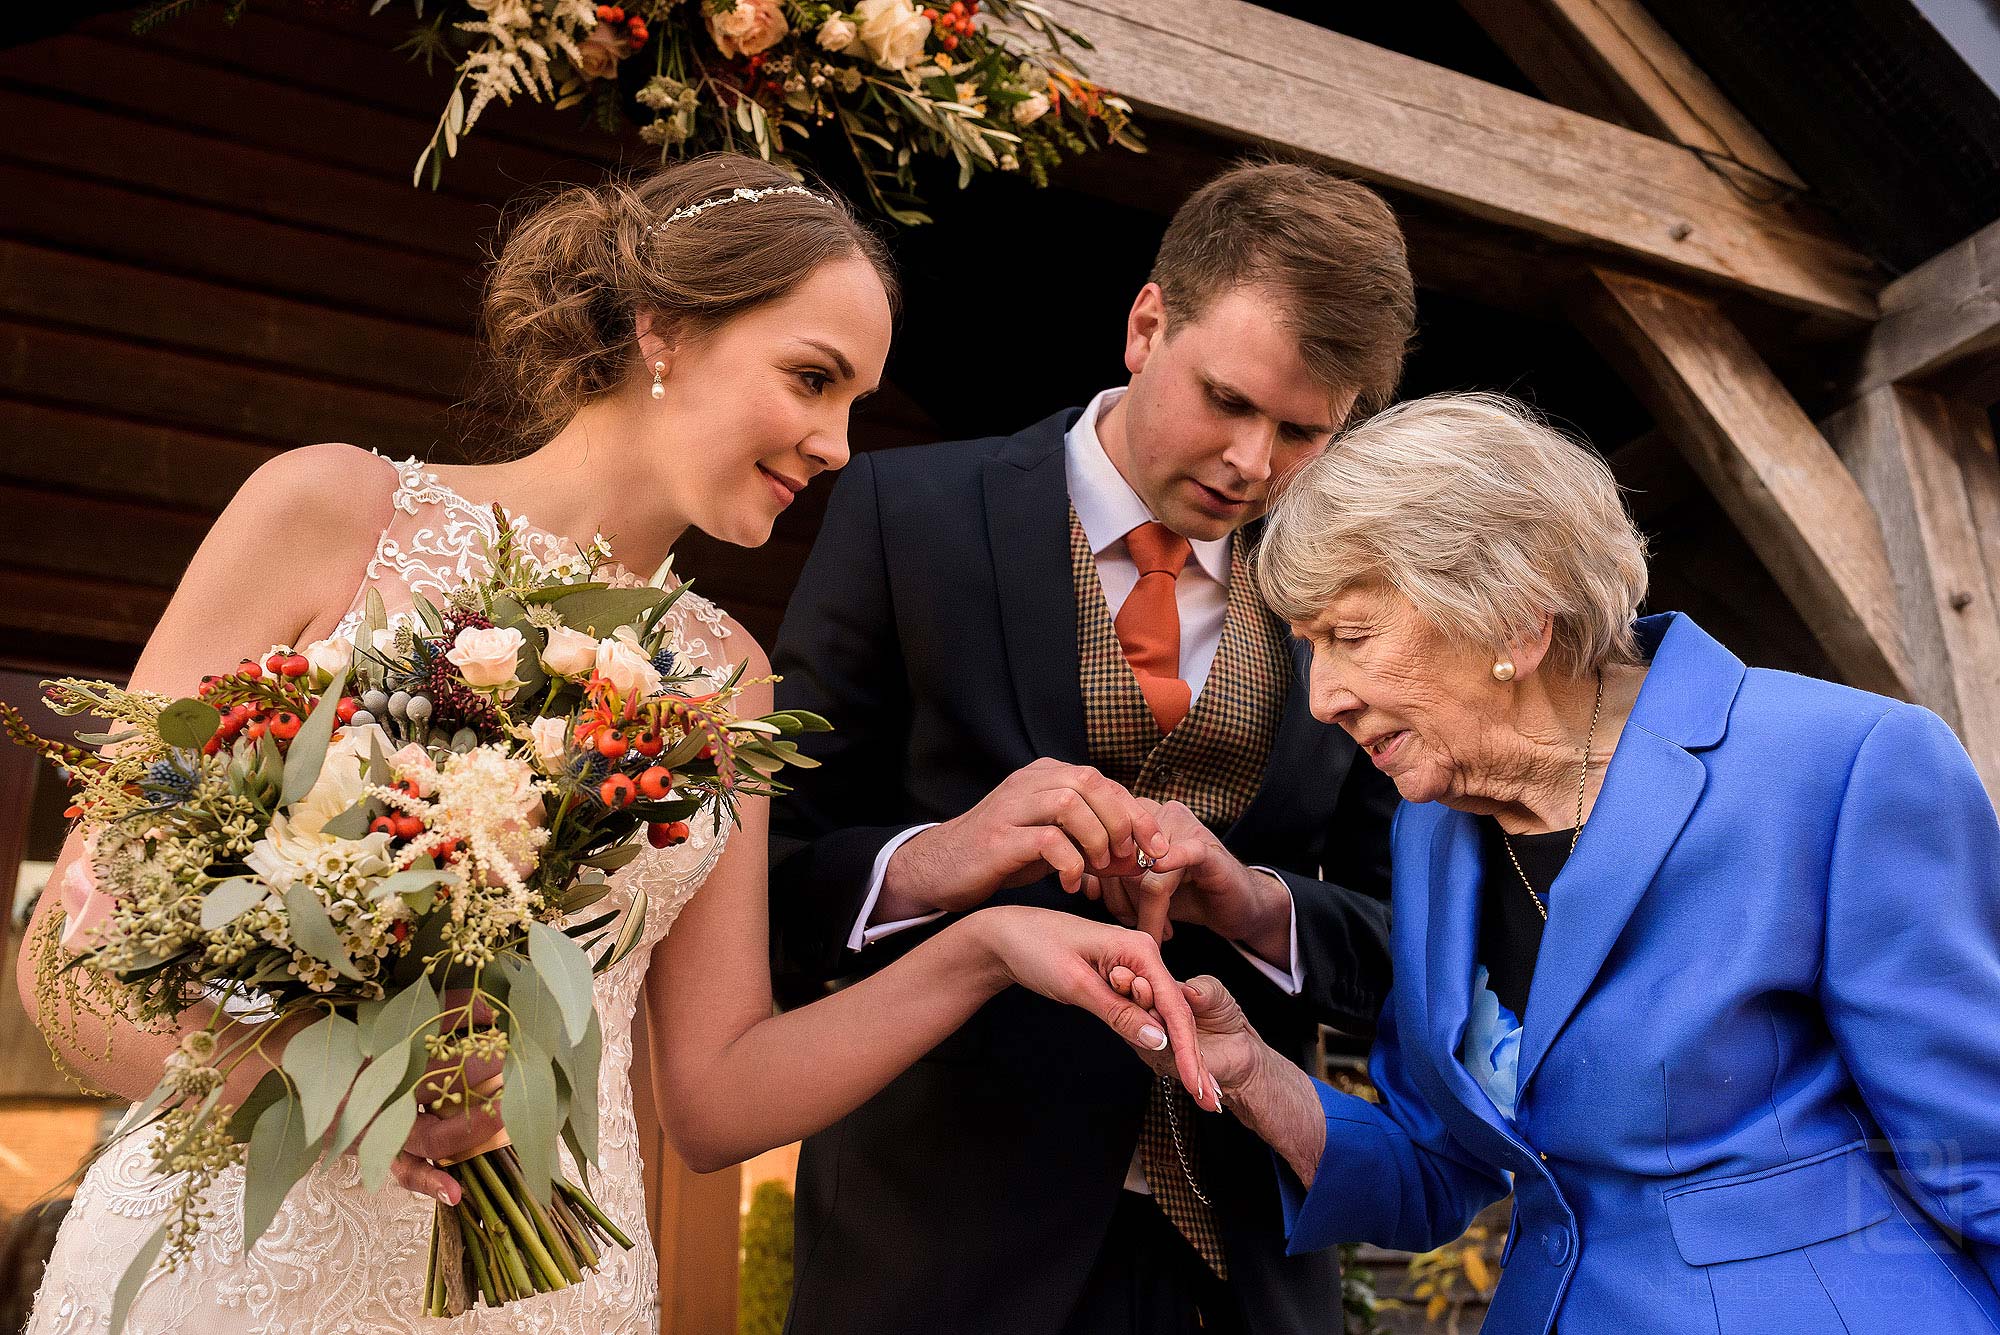 grandma looking at bride's wedding ring